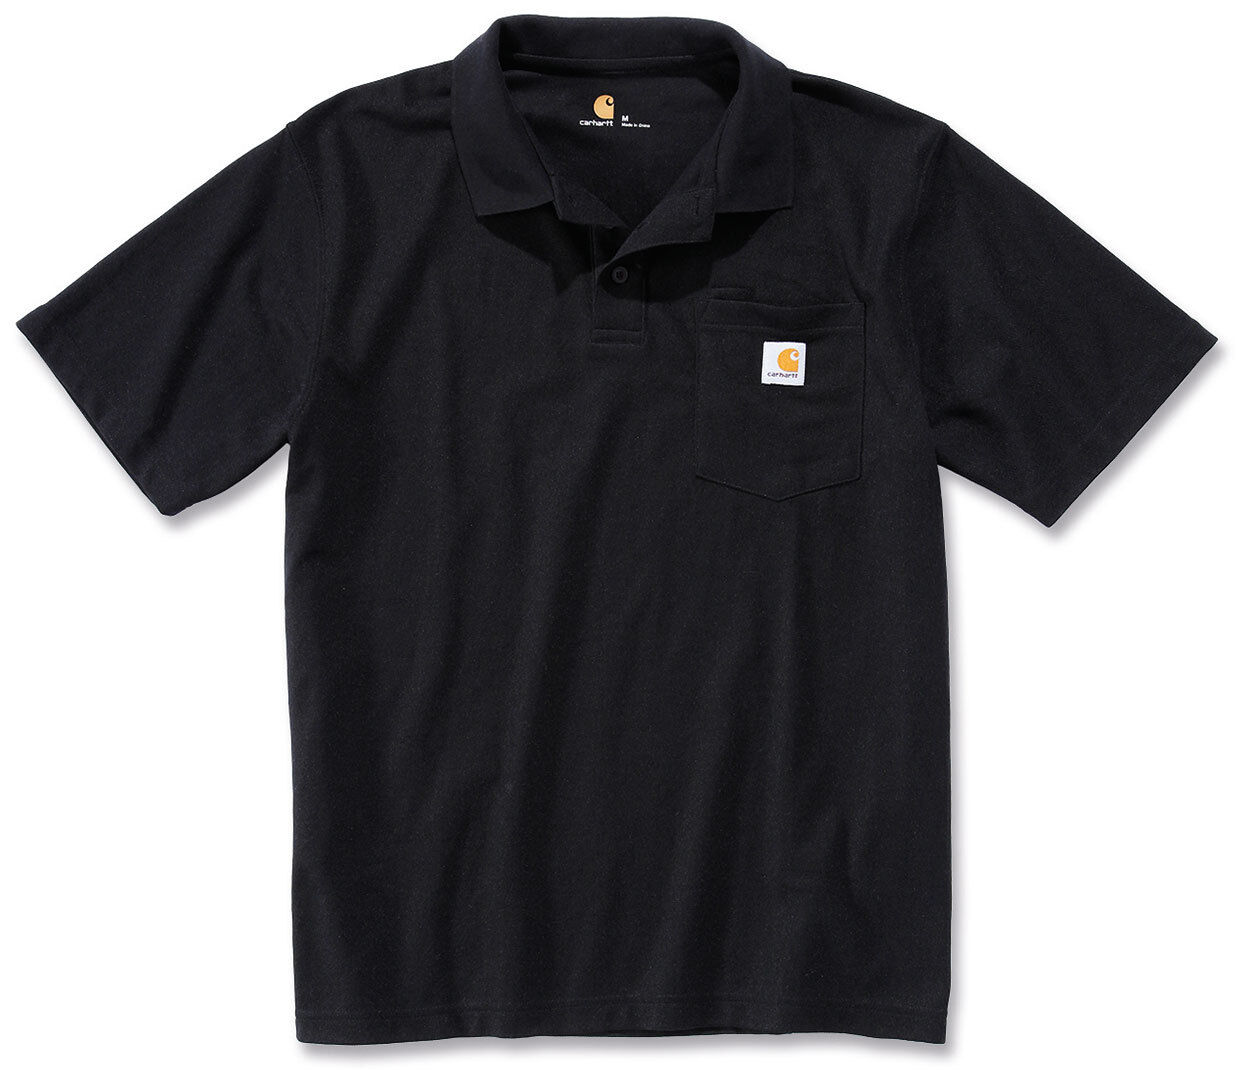 Carhartt Contractors Work Pocket Polo Shirt Polokošile XS Černá